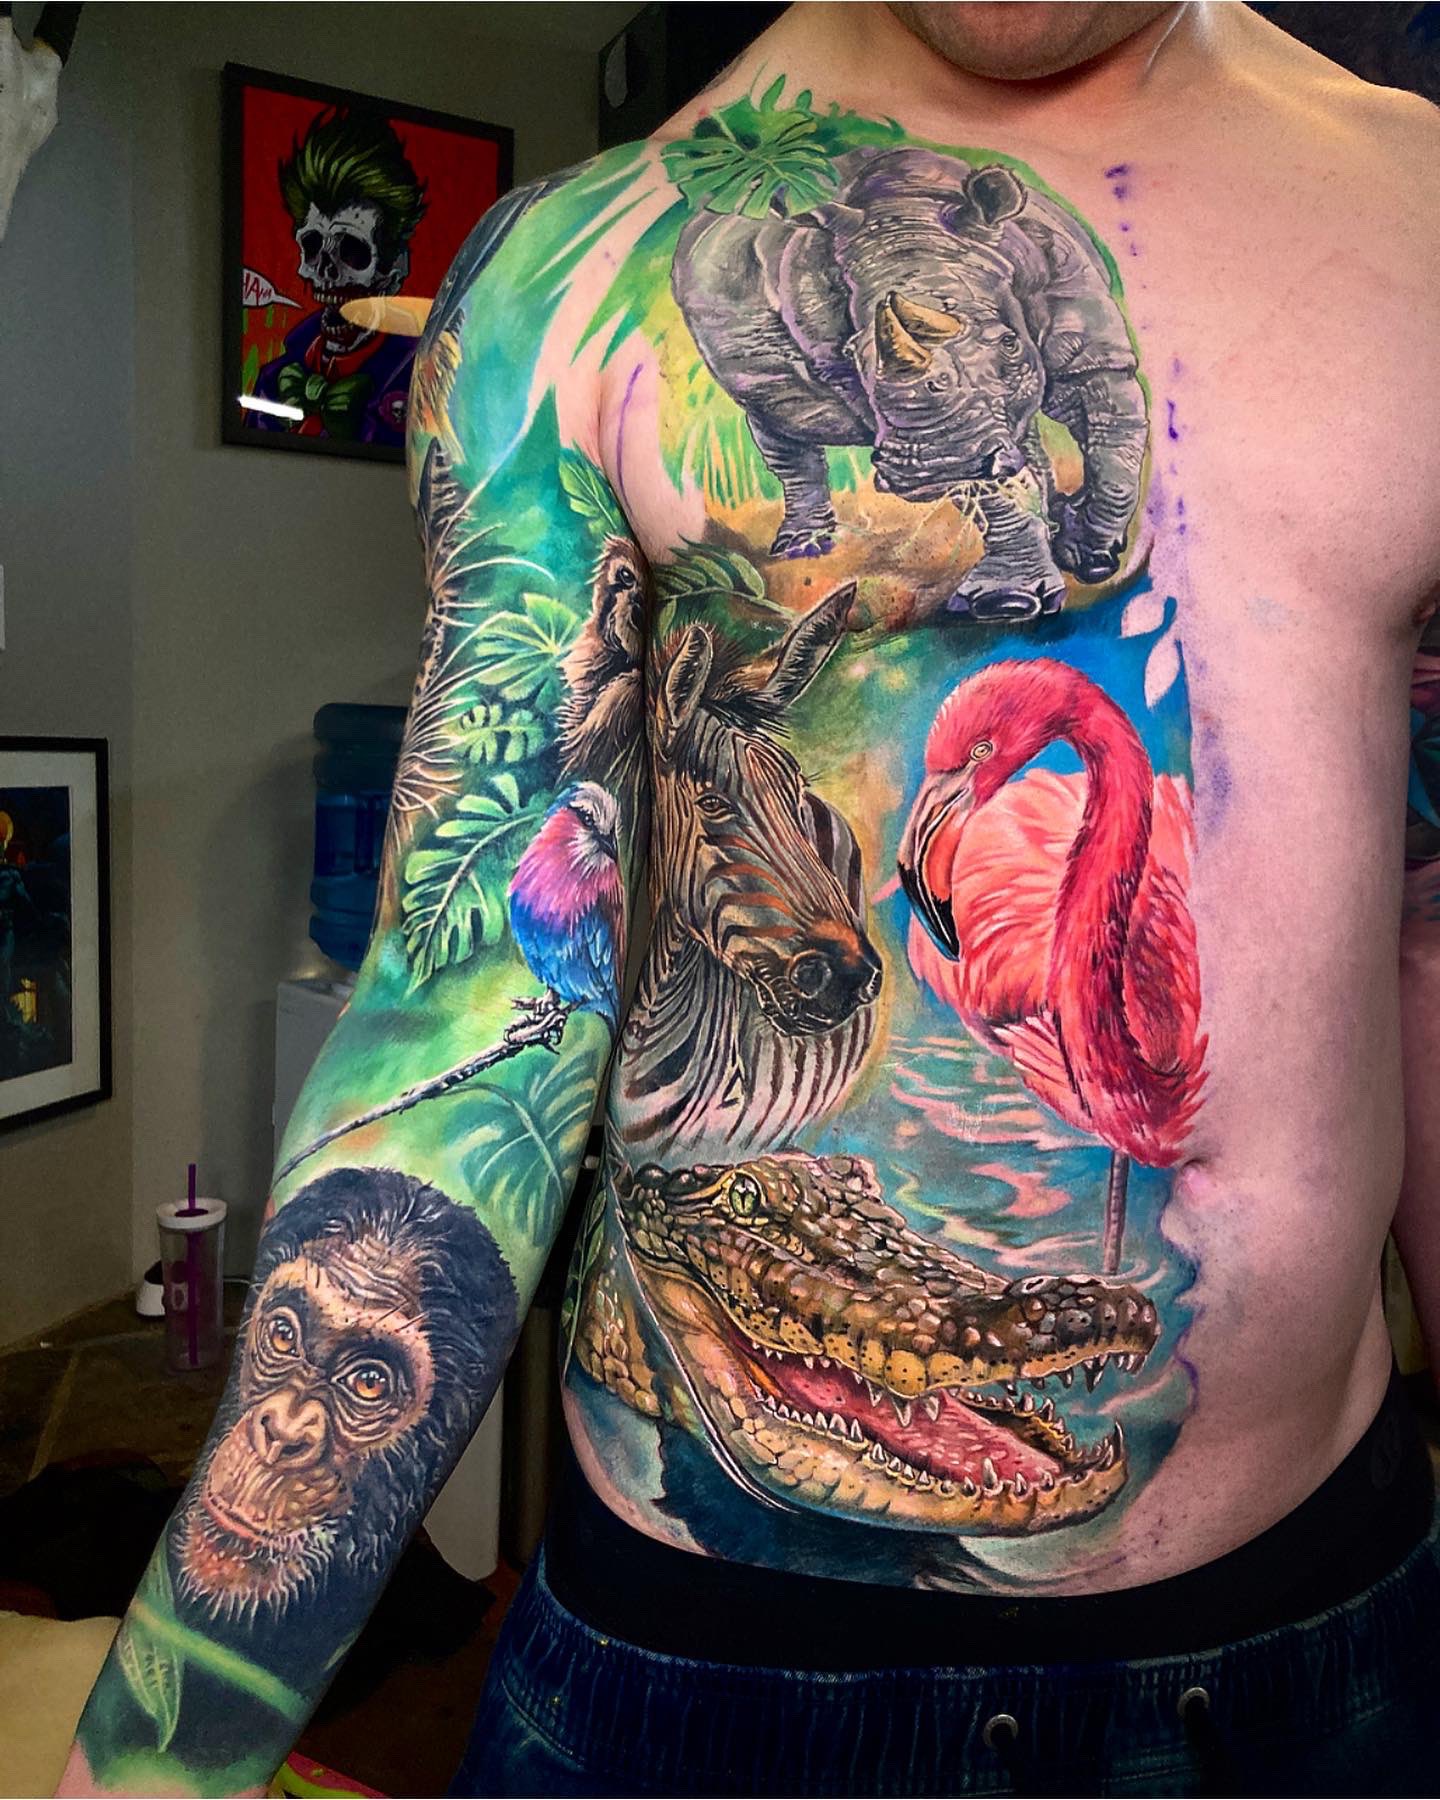 Tattoo uploaded by Tattoodo • King 'o' the jungle by Stefano Alcantara  #StefanoAlcantara #realism #realistic #hyperrealism #lion #junglecat #safari  #kingofthejungle #roar #cat #nature #animal #tattoooftheday • Tattoodo